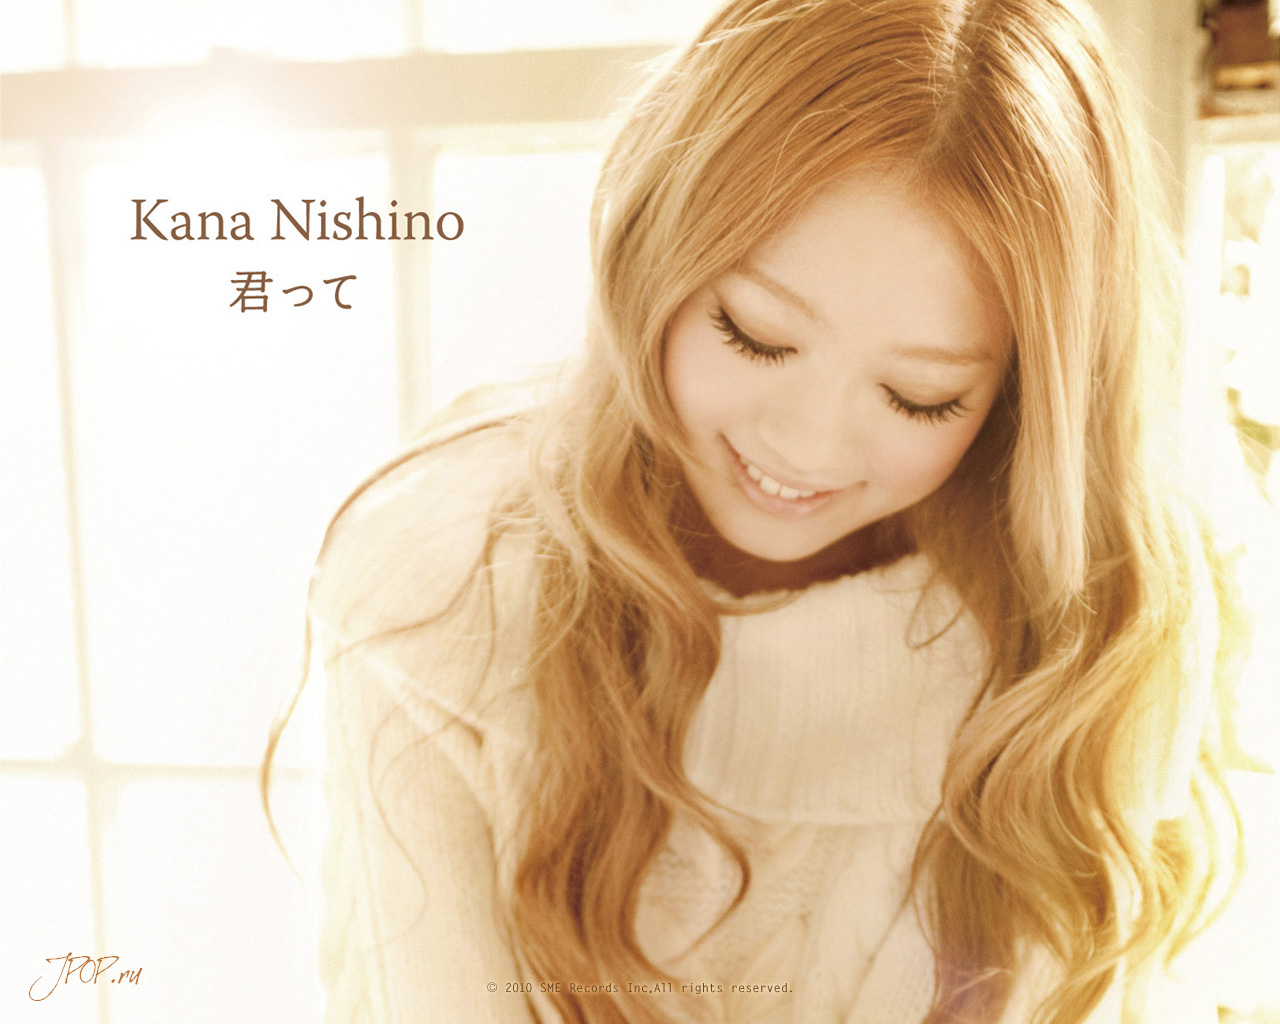 wallpaper - Kana Nishino Official Wallpaper (23667869) - Fanpop